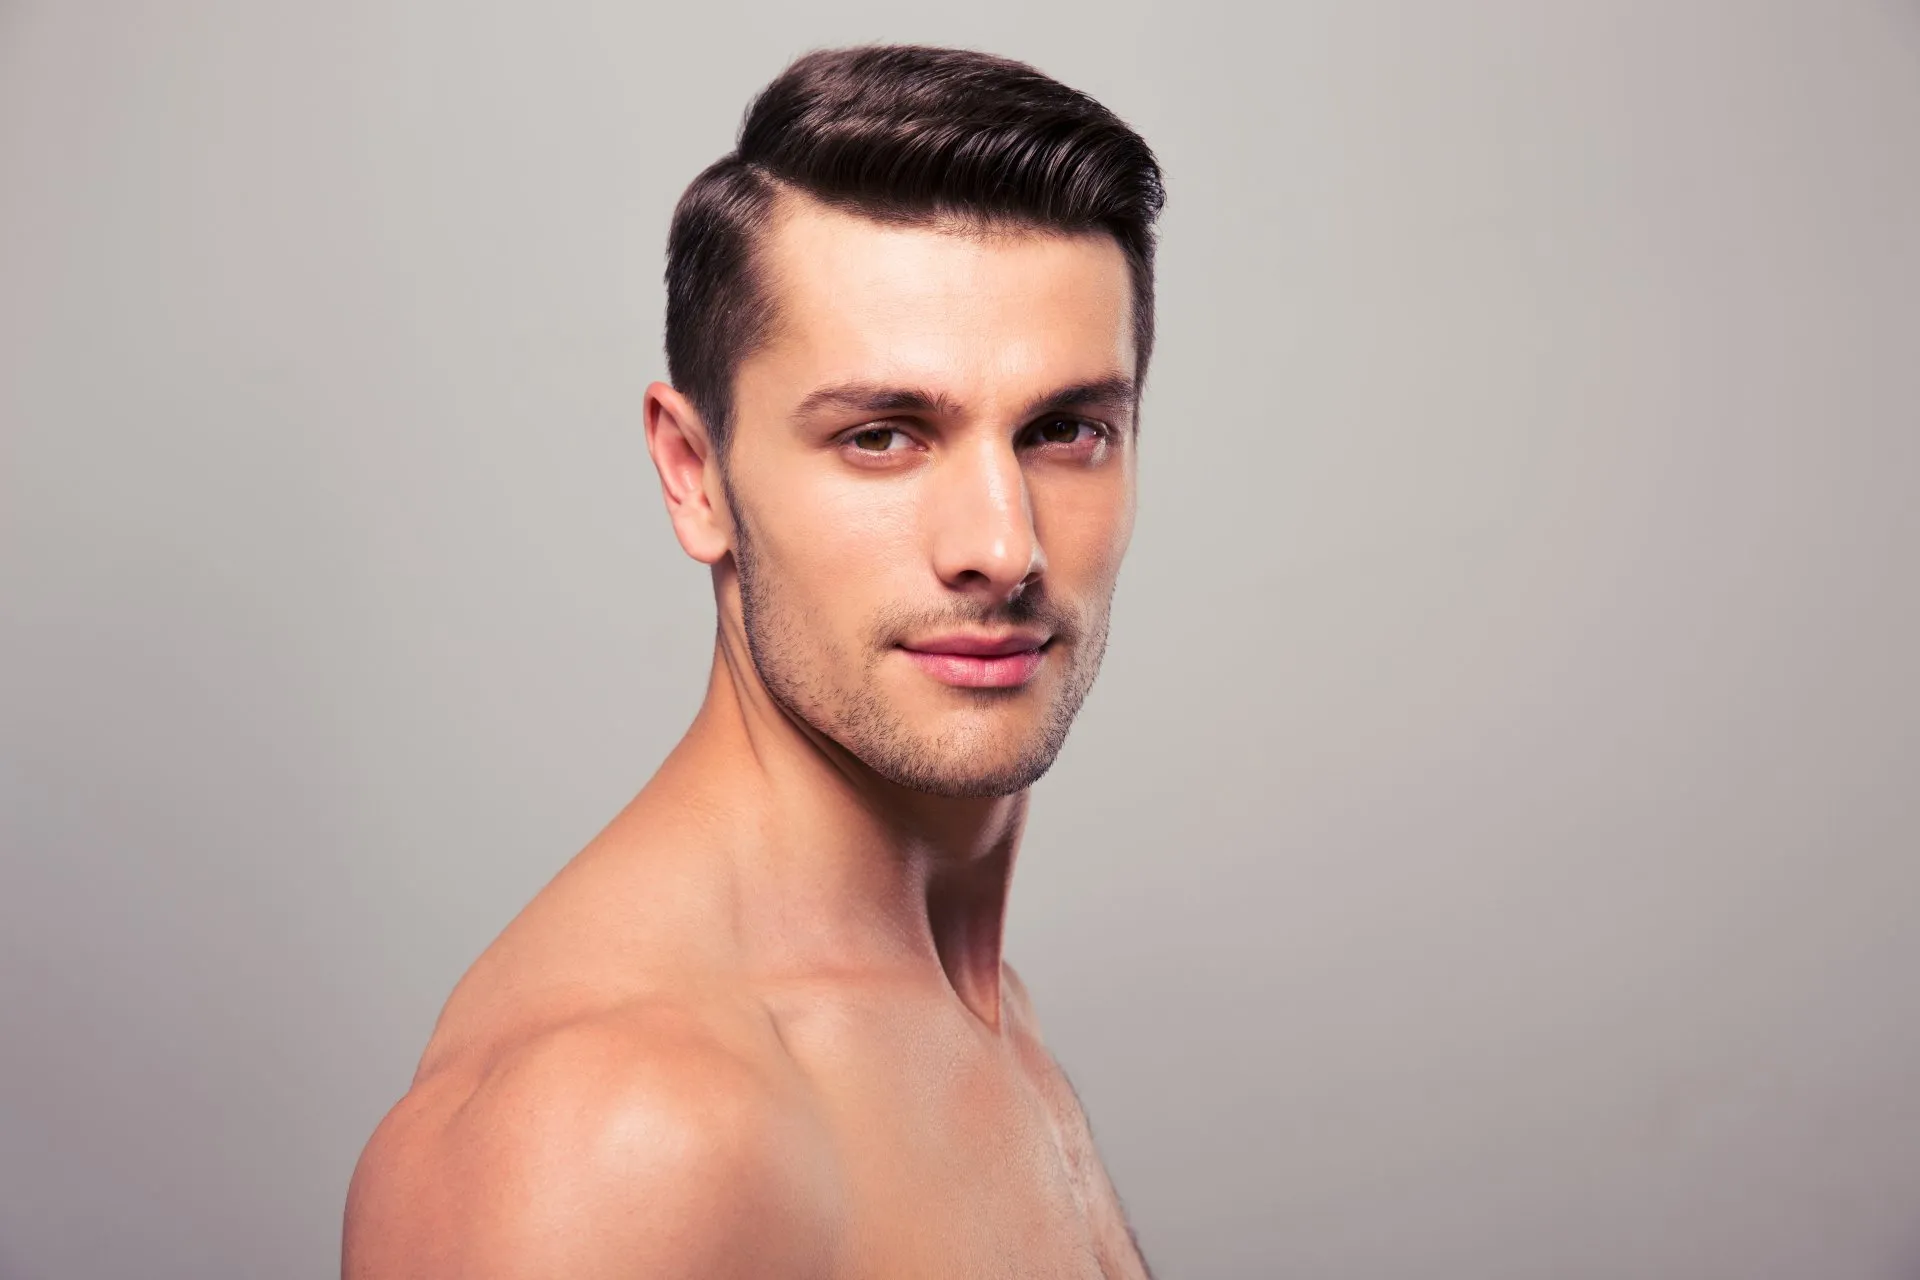 Good lookin brunette man - Hair Restoration Services - Skinworks Wellness & Aesthetics - Hendersonville, TN